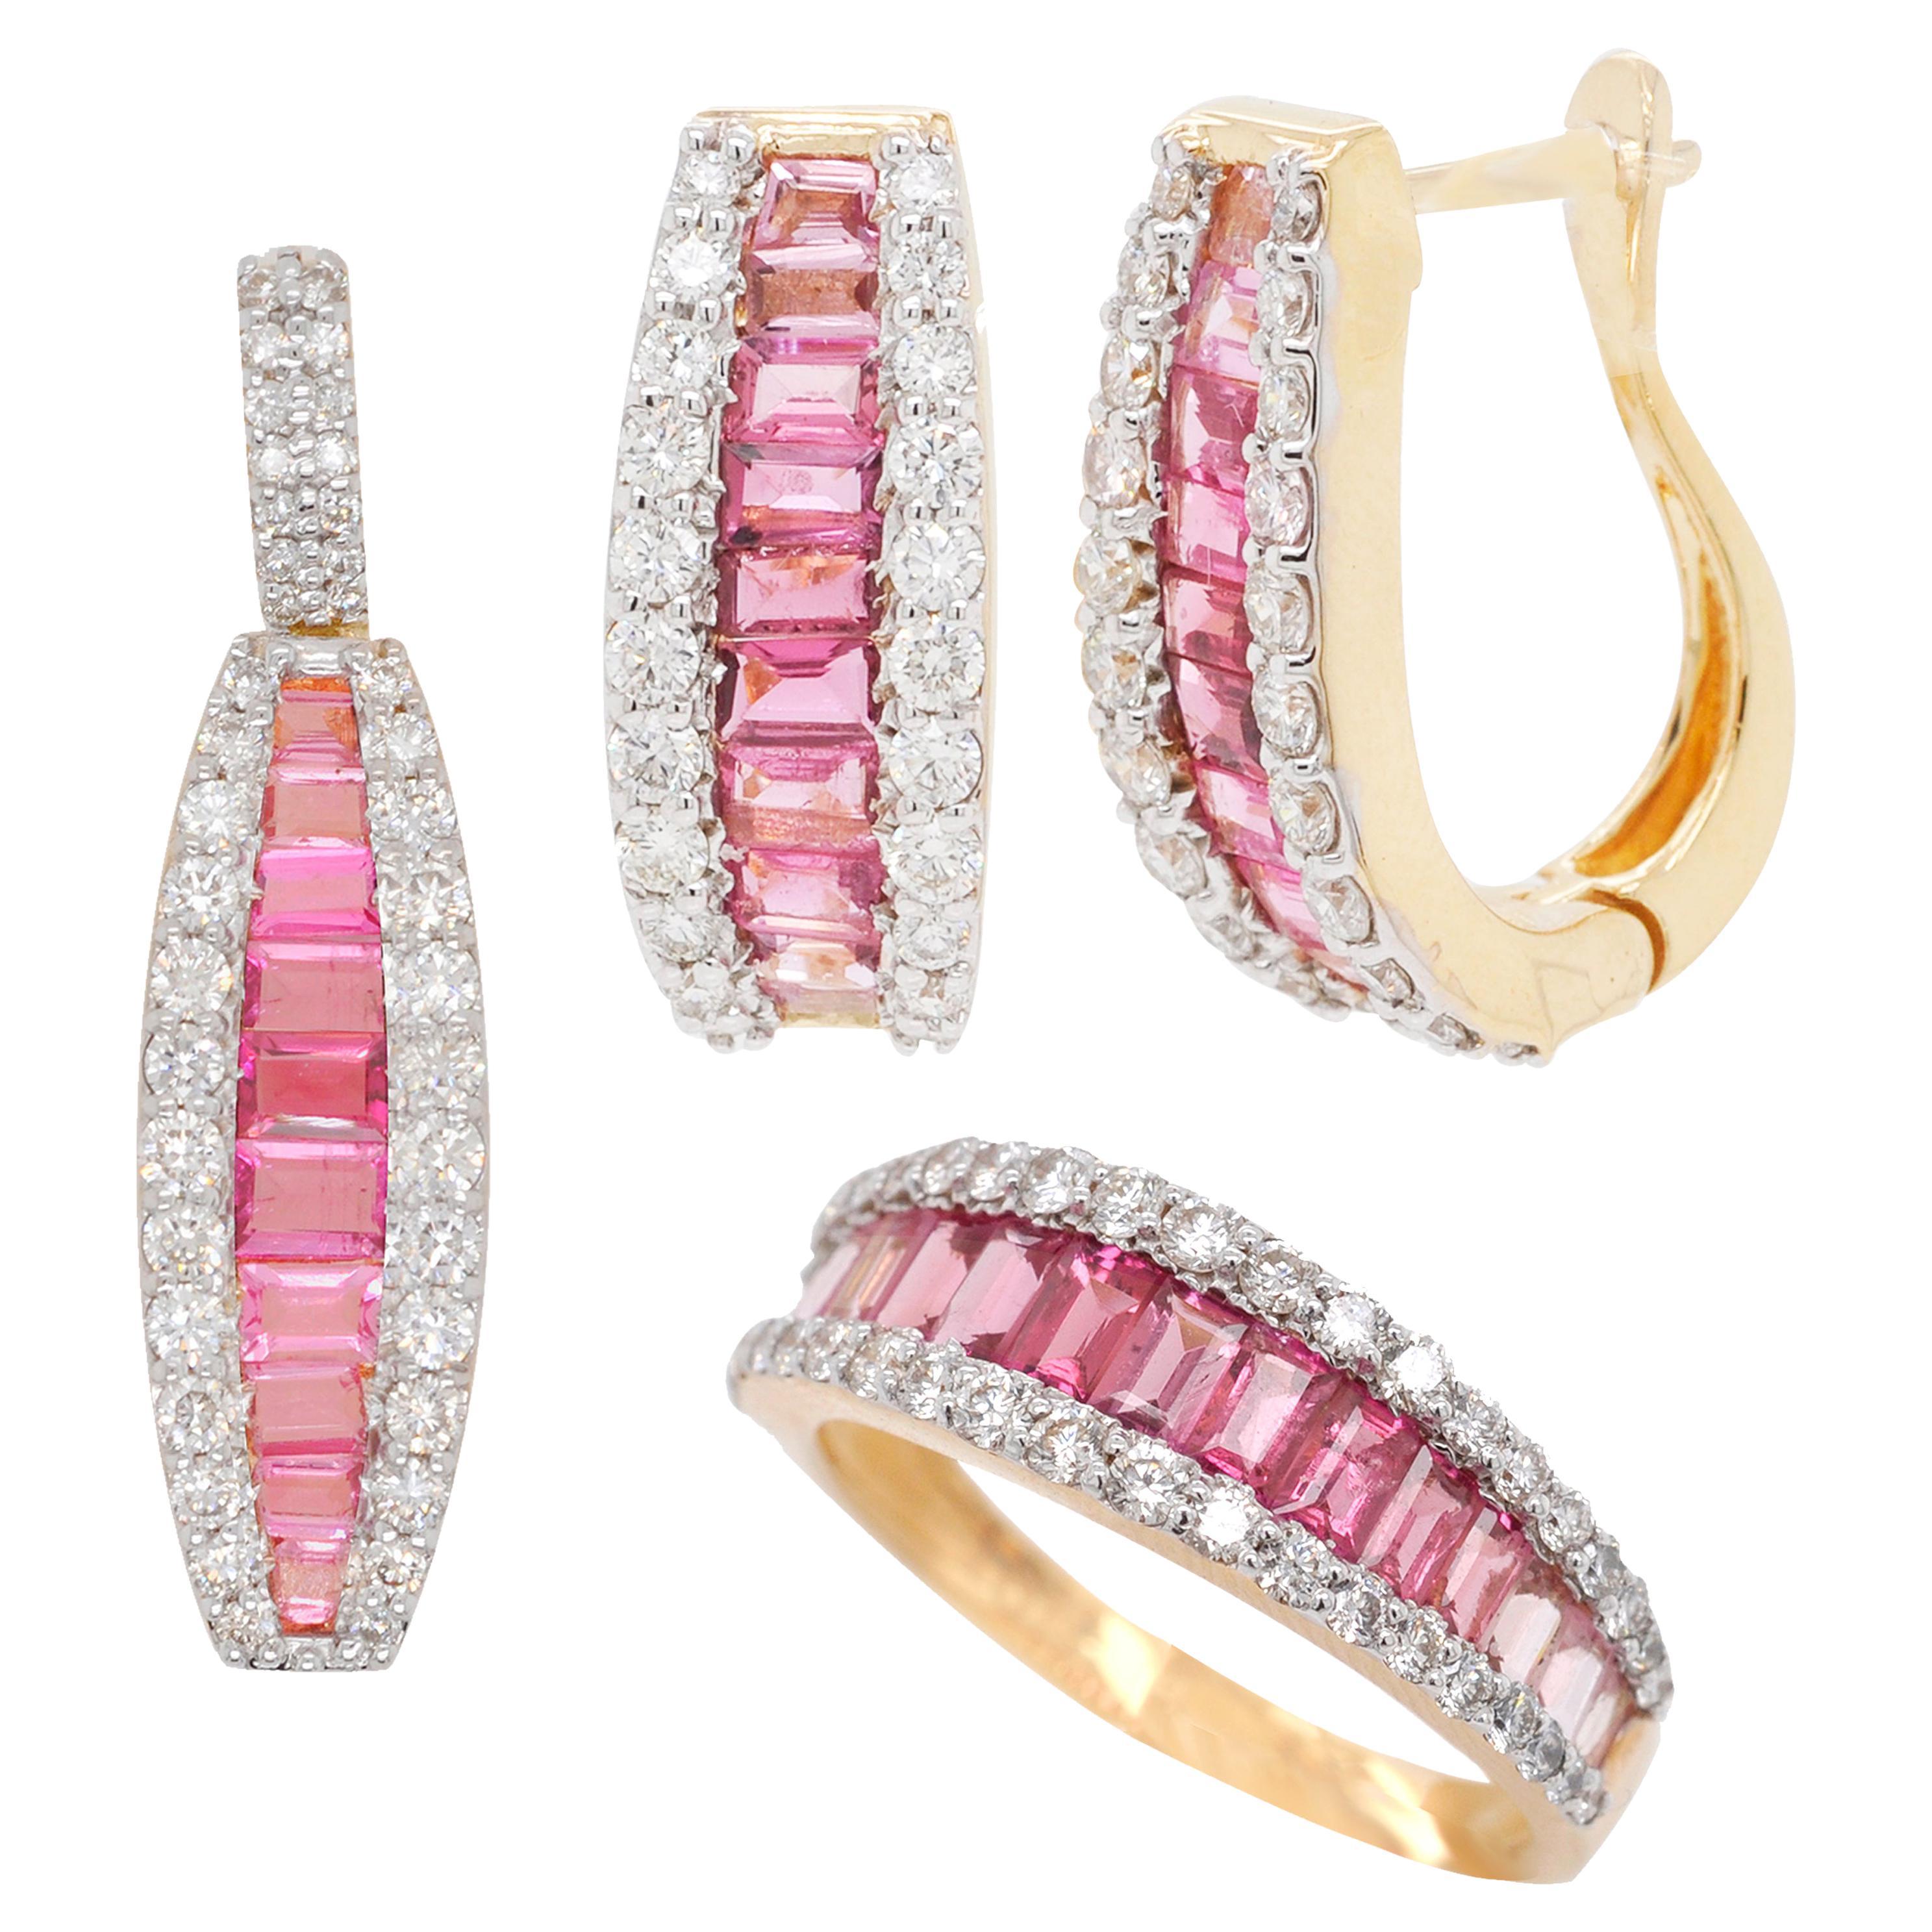 18 Karat Gold Pink Tourmaline Diamond Huggies Pendant Necklace Earrings Ring Set For Sale